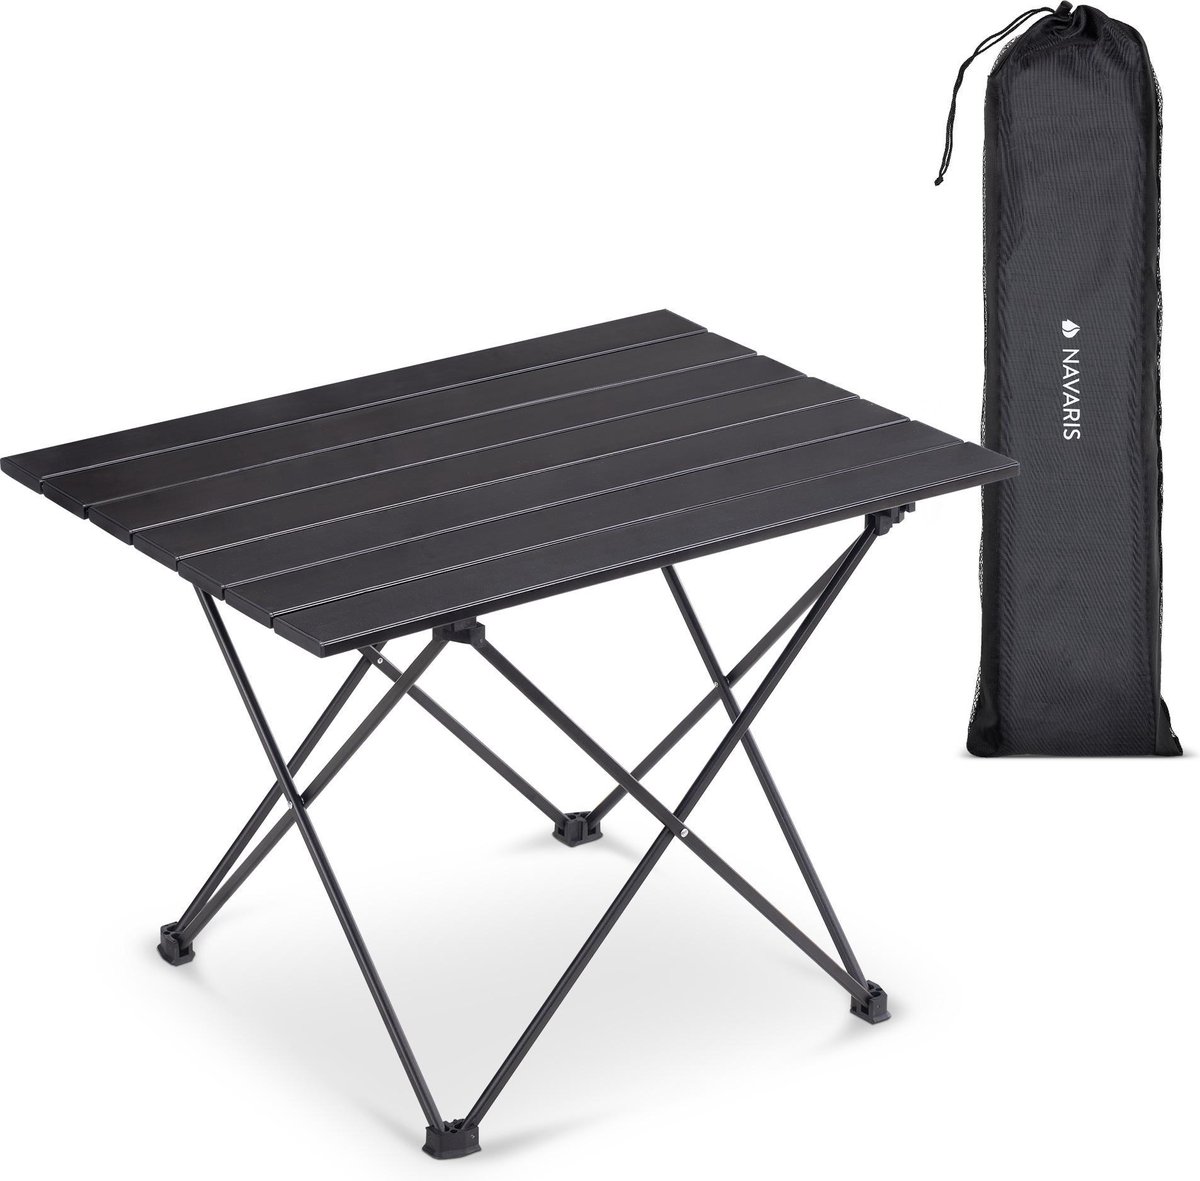 Navaris campingtafel - Inklapbaar campingtafeltje van aluminium - Opvouwbare tafel inclusief draagtas - Picknicktafel - Zwart